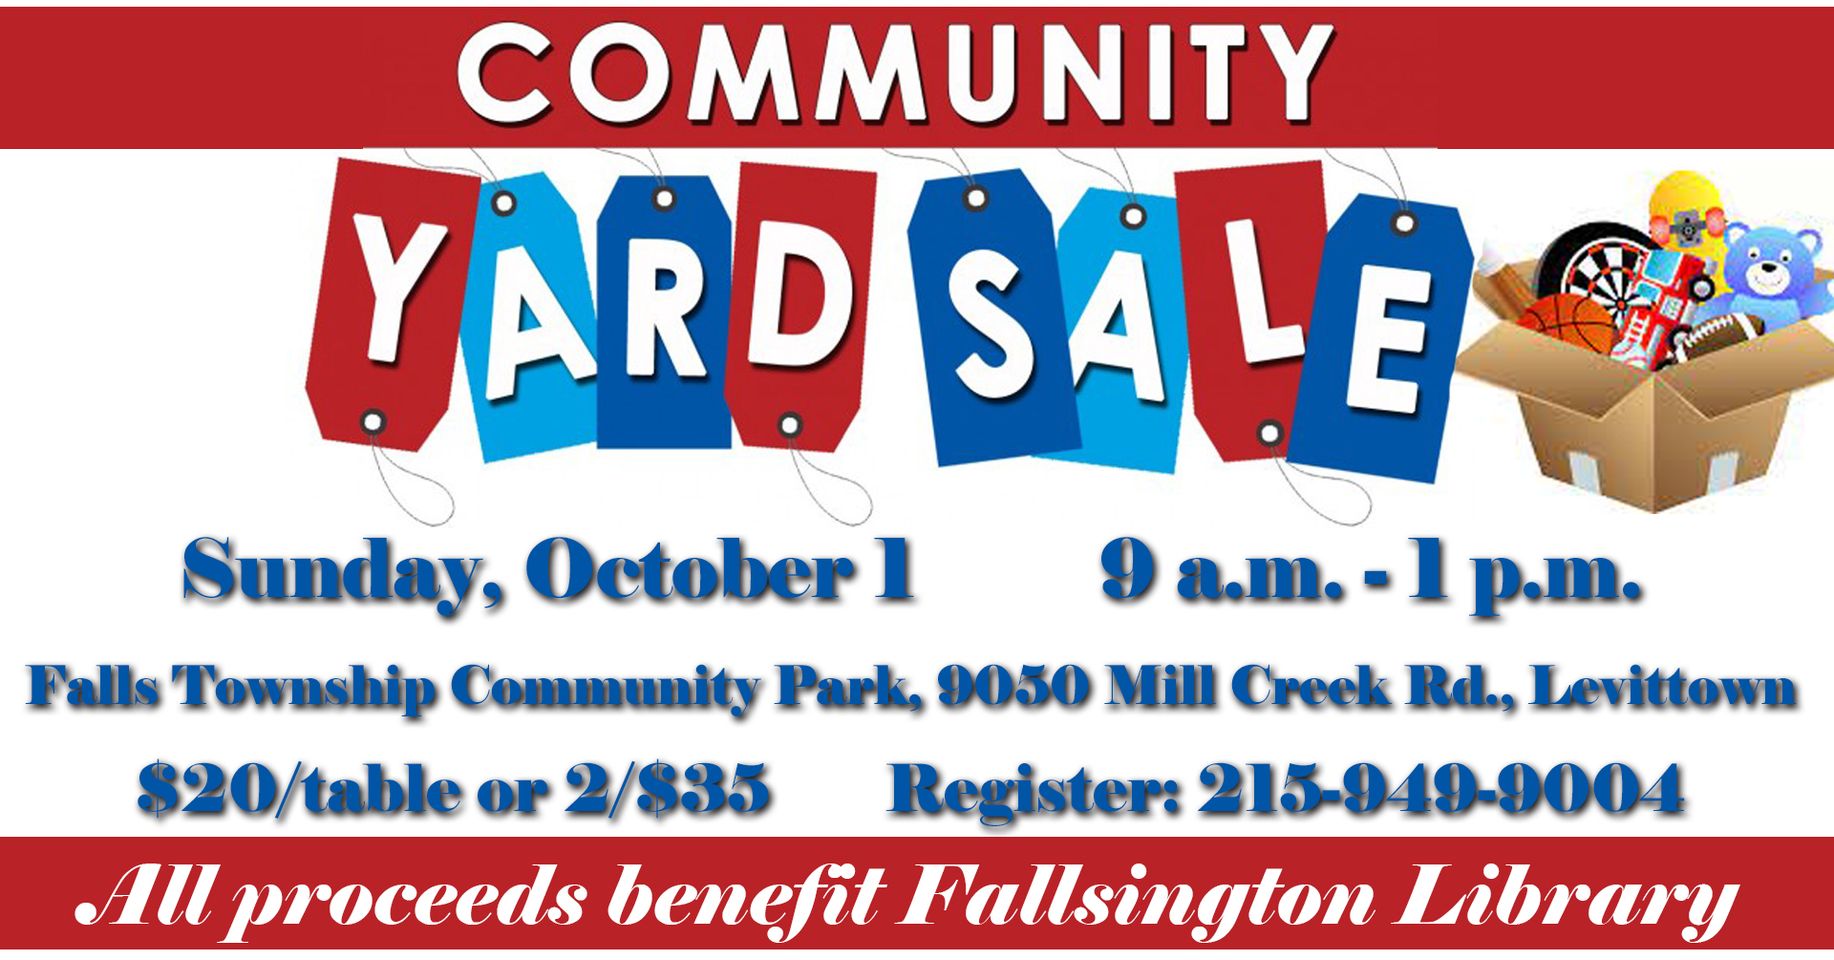 Community Yard Sale Facebook Graphic Oct 1